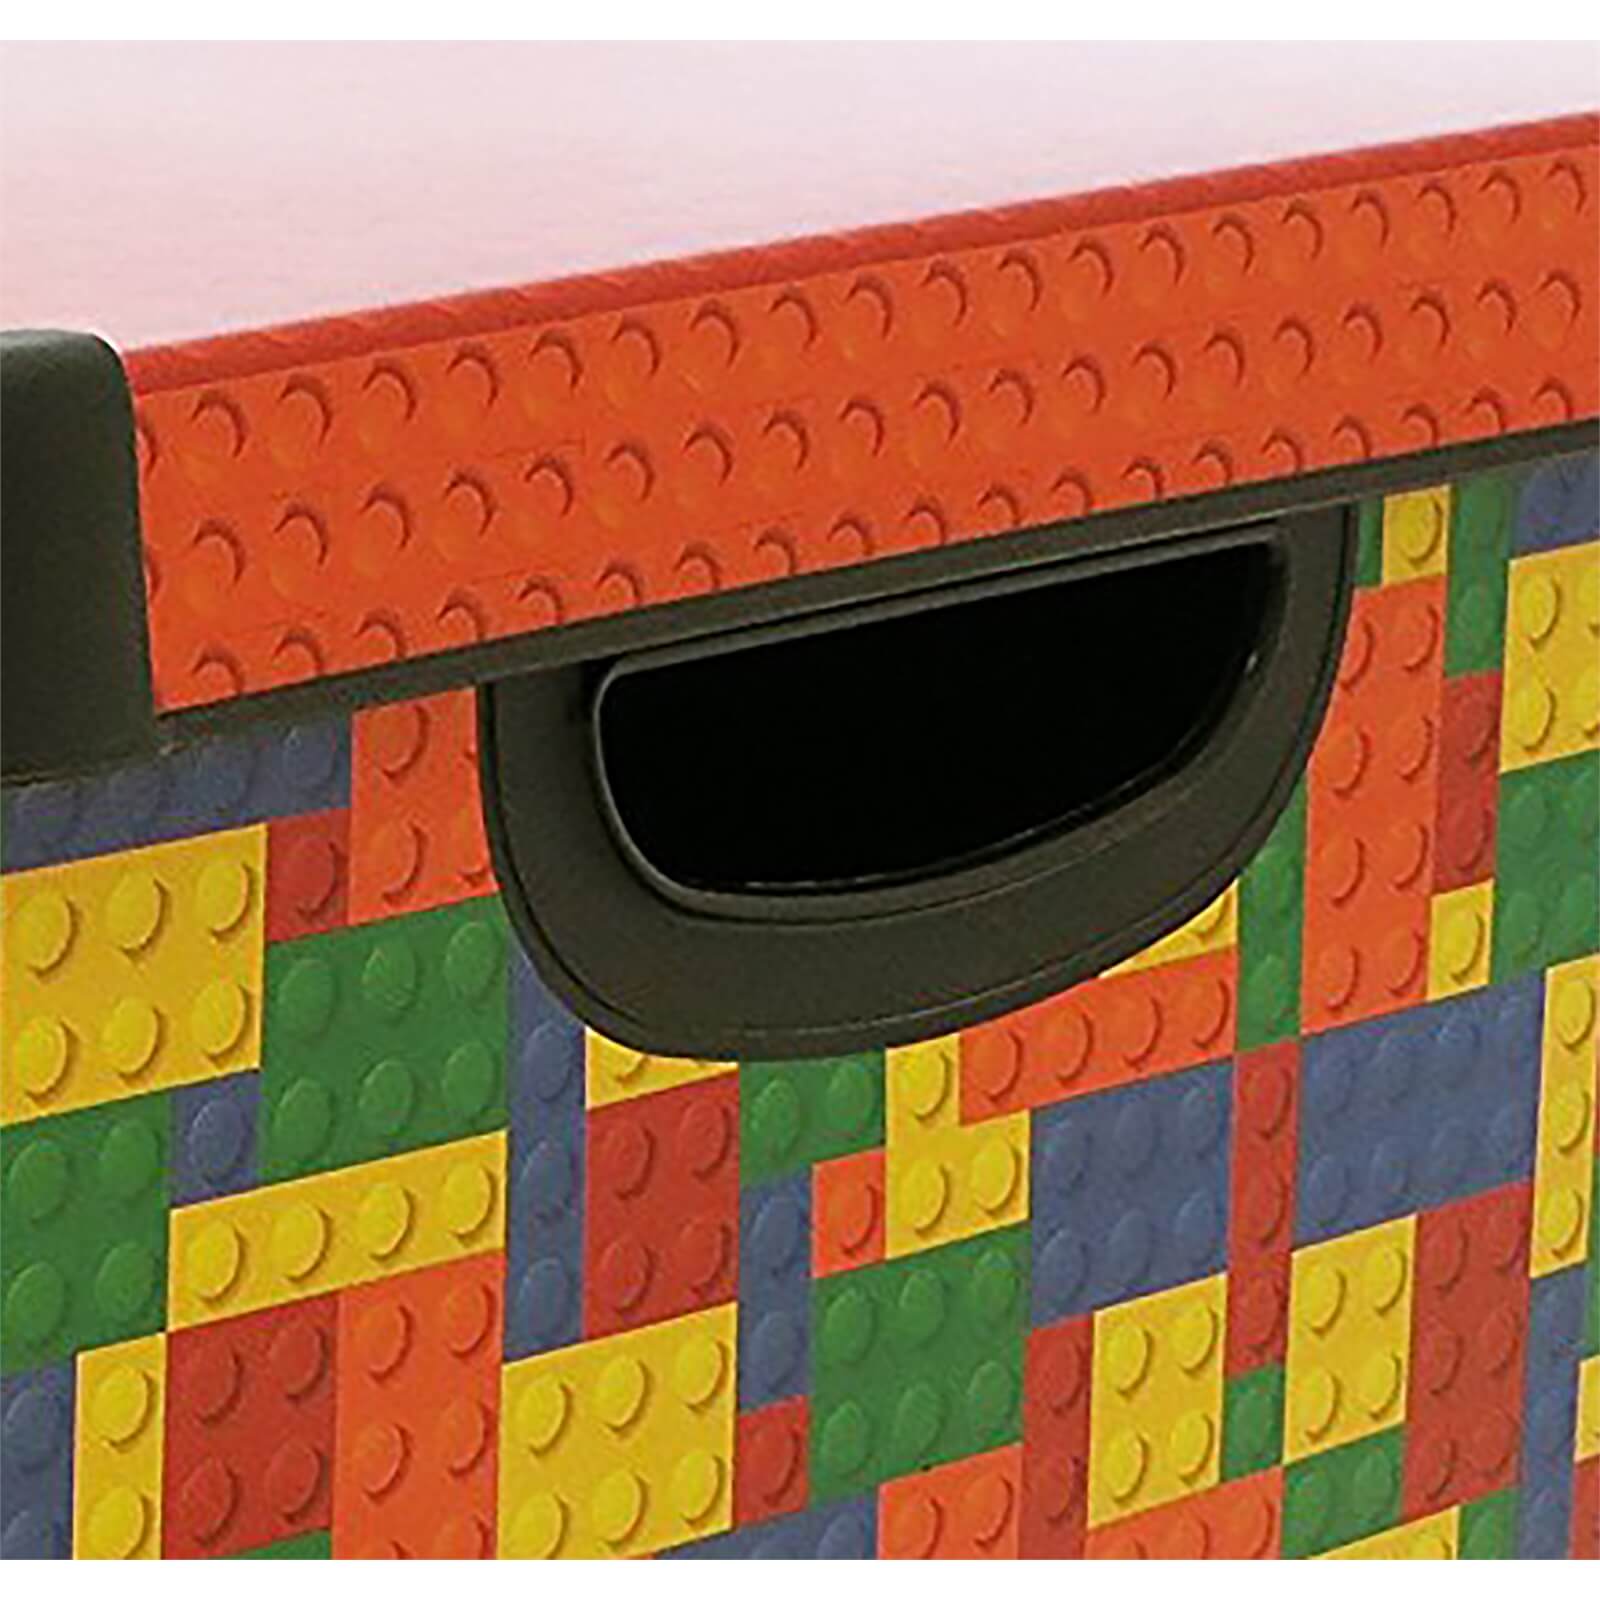 Curver Stockholm Bright Blocks Plastic Deco Storage Box Multi Colour 22L